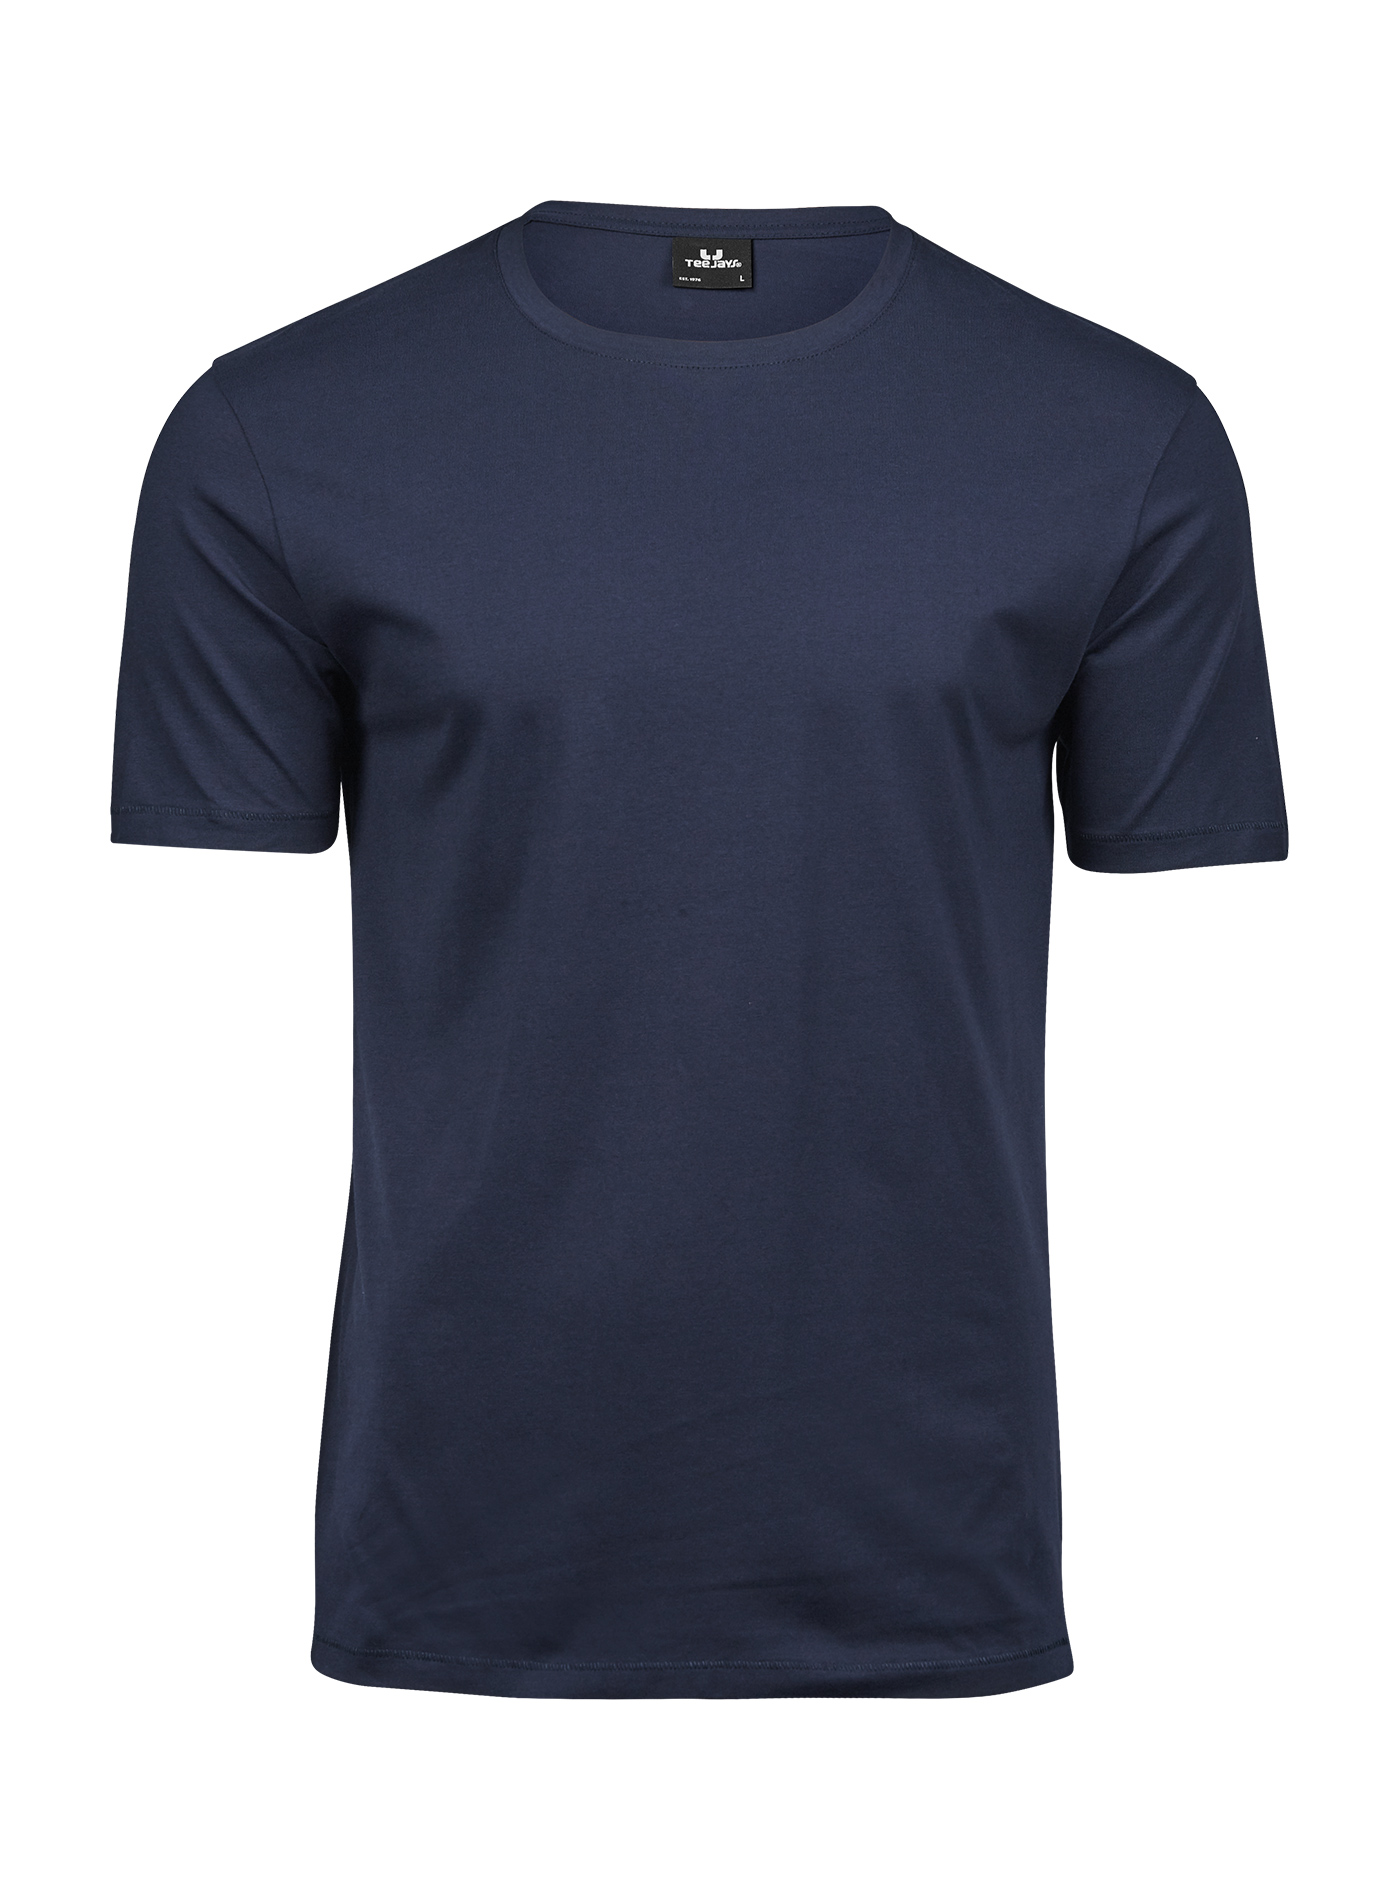 Pánské tričko Luxury Tee Jays - Cobalt blue/Navy L